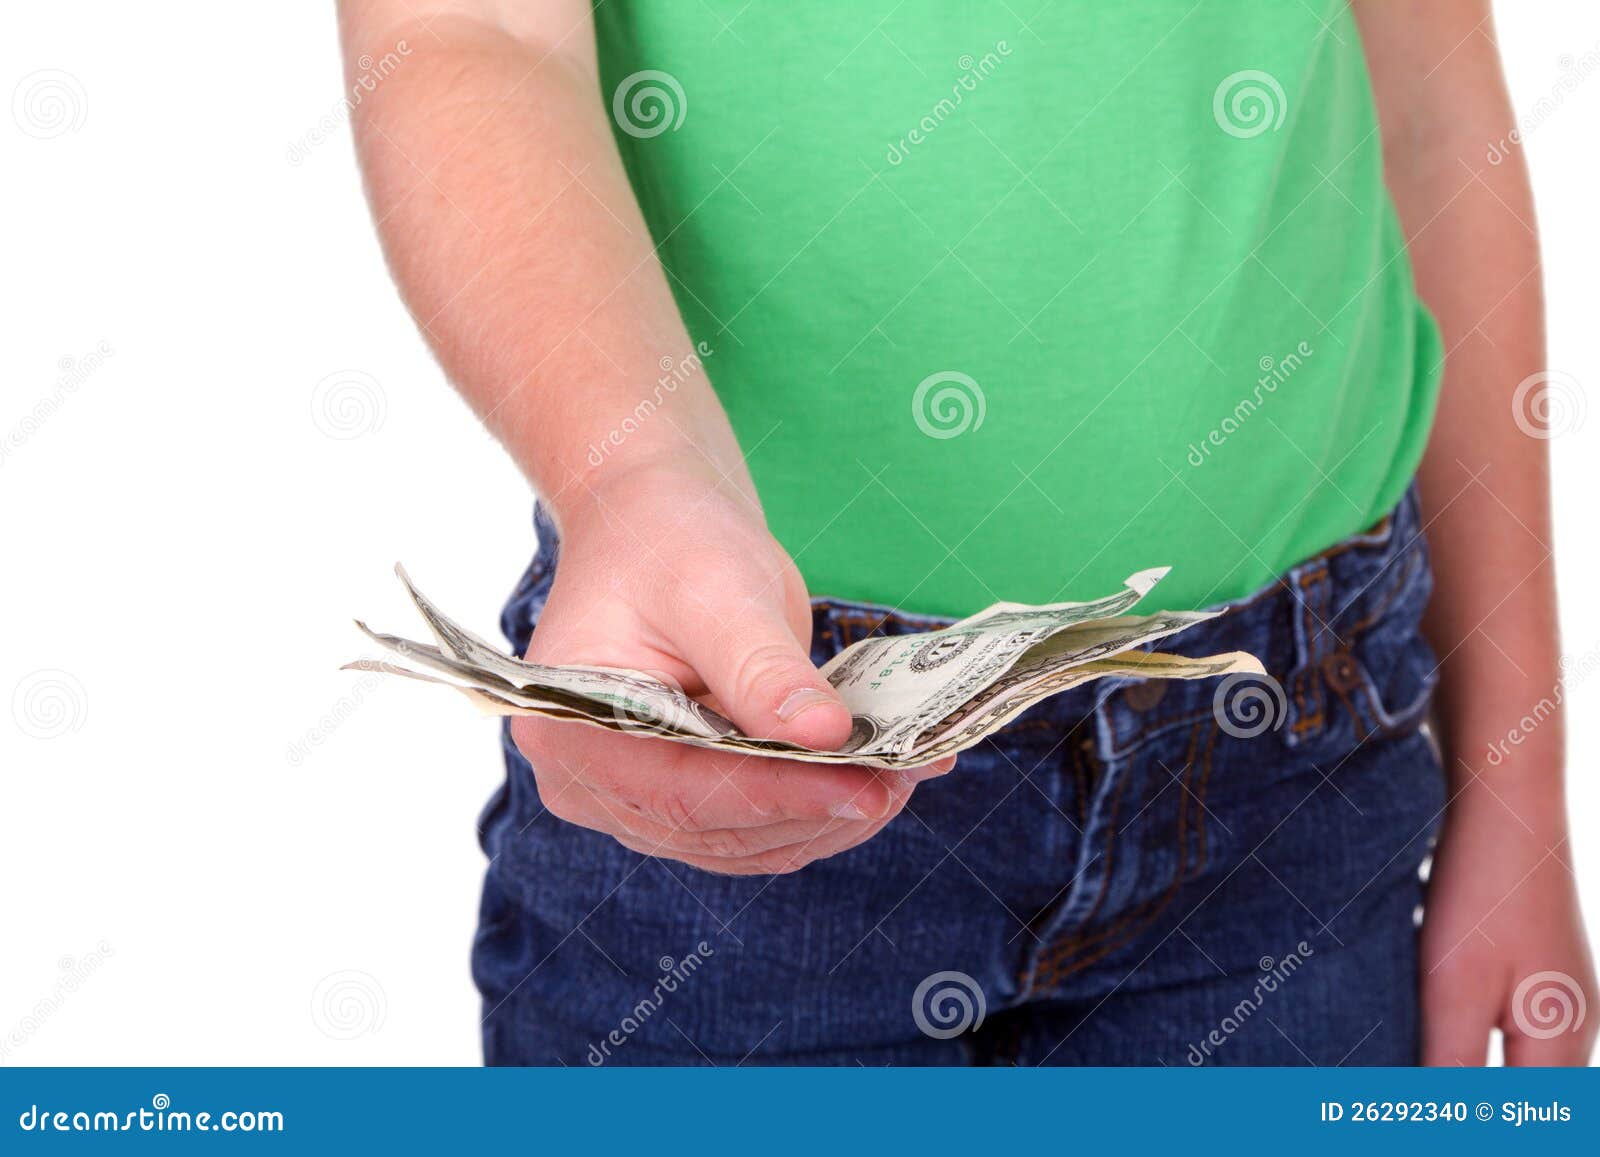 Child giving money stock photo. Image of banking, closeup - 26292340